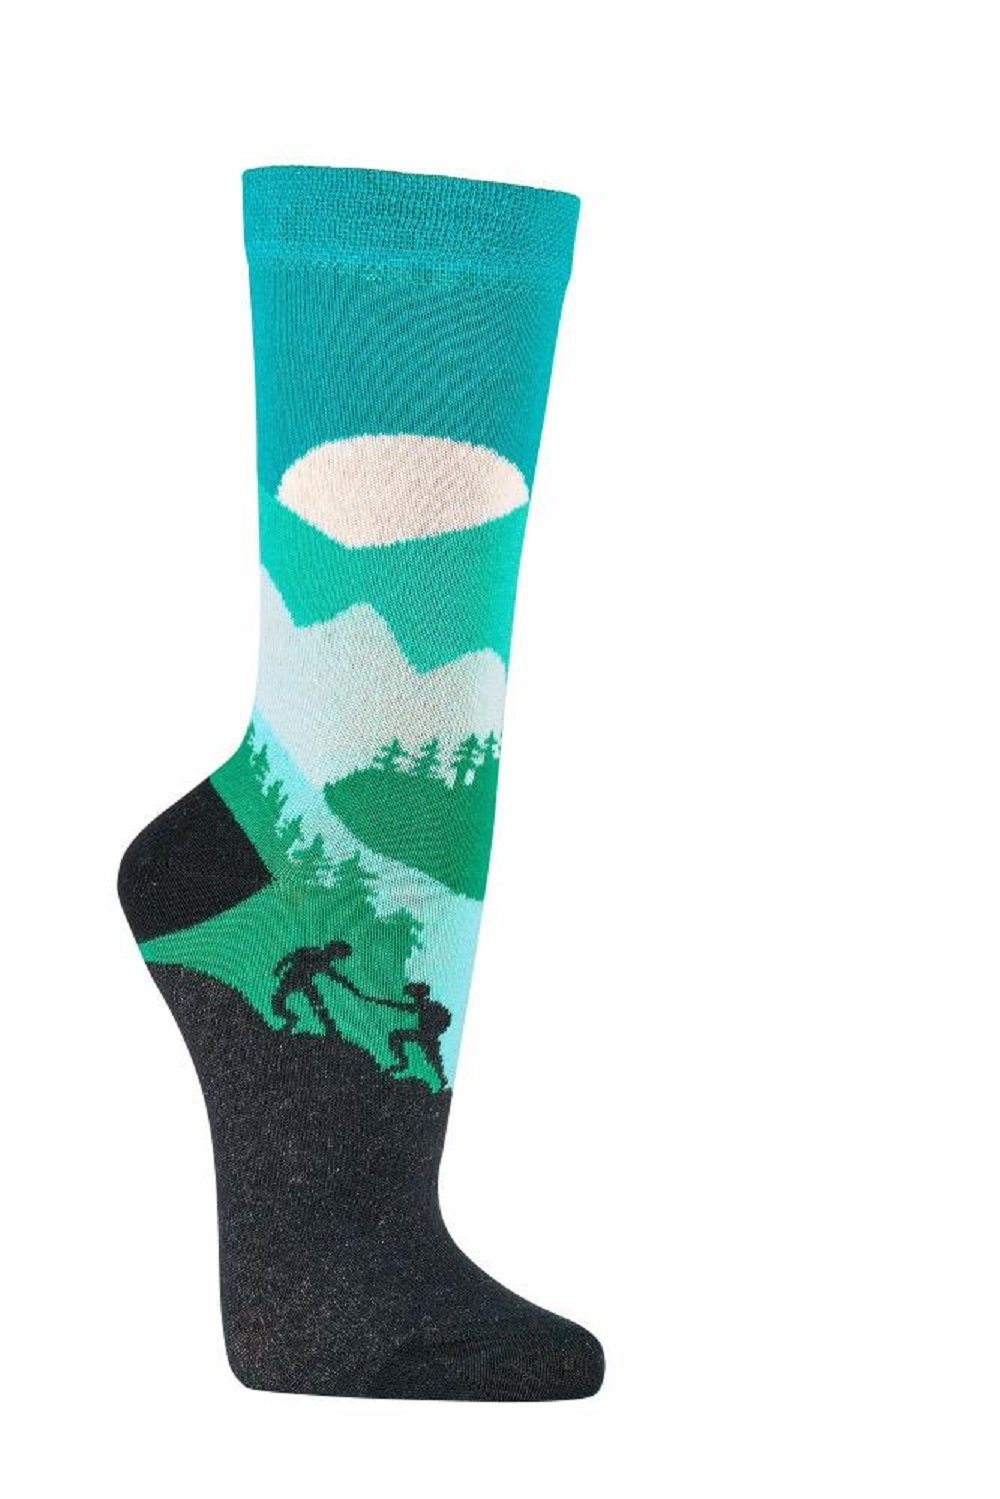 Socks 4 Fun Freizeitsocken Socken 2-Paar, Paar) 2 Berge (2 Paar, Bergglück